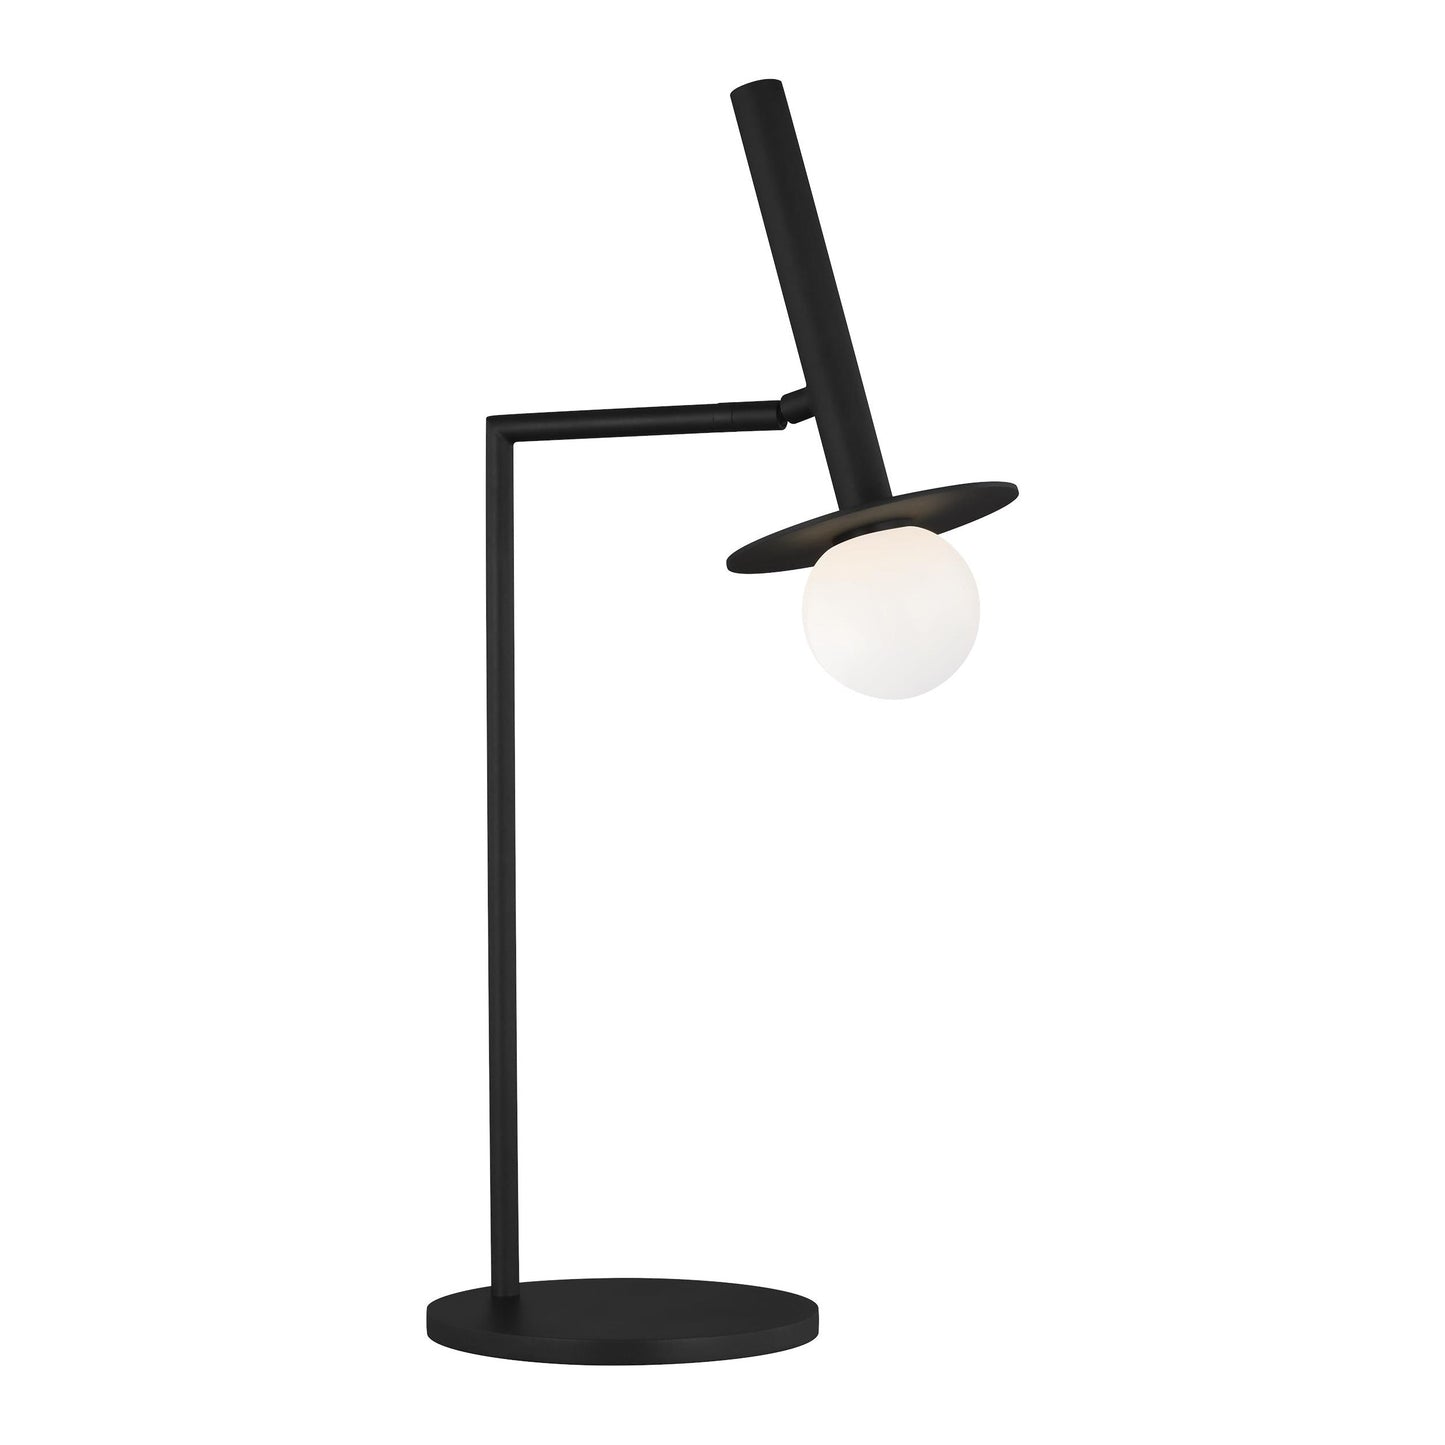 Kelly Wearstler Nodes Table Lamp